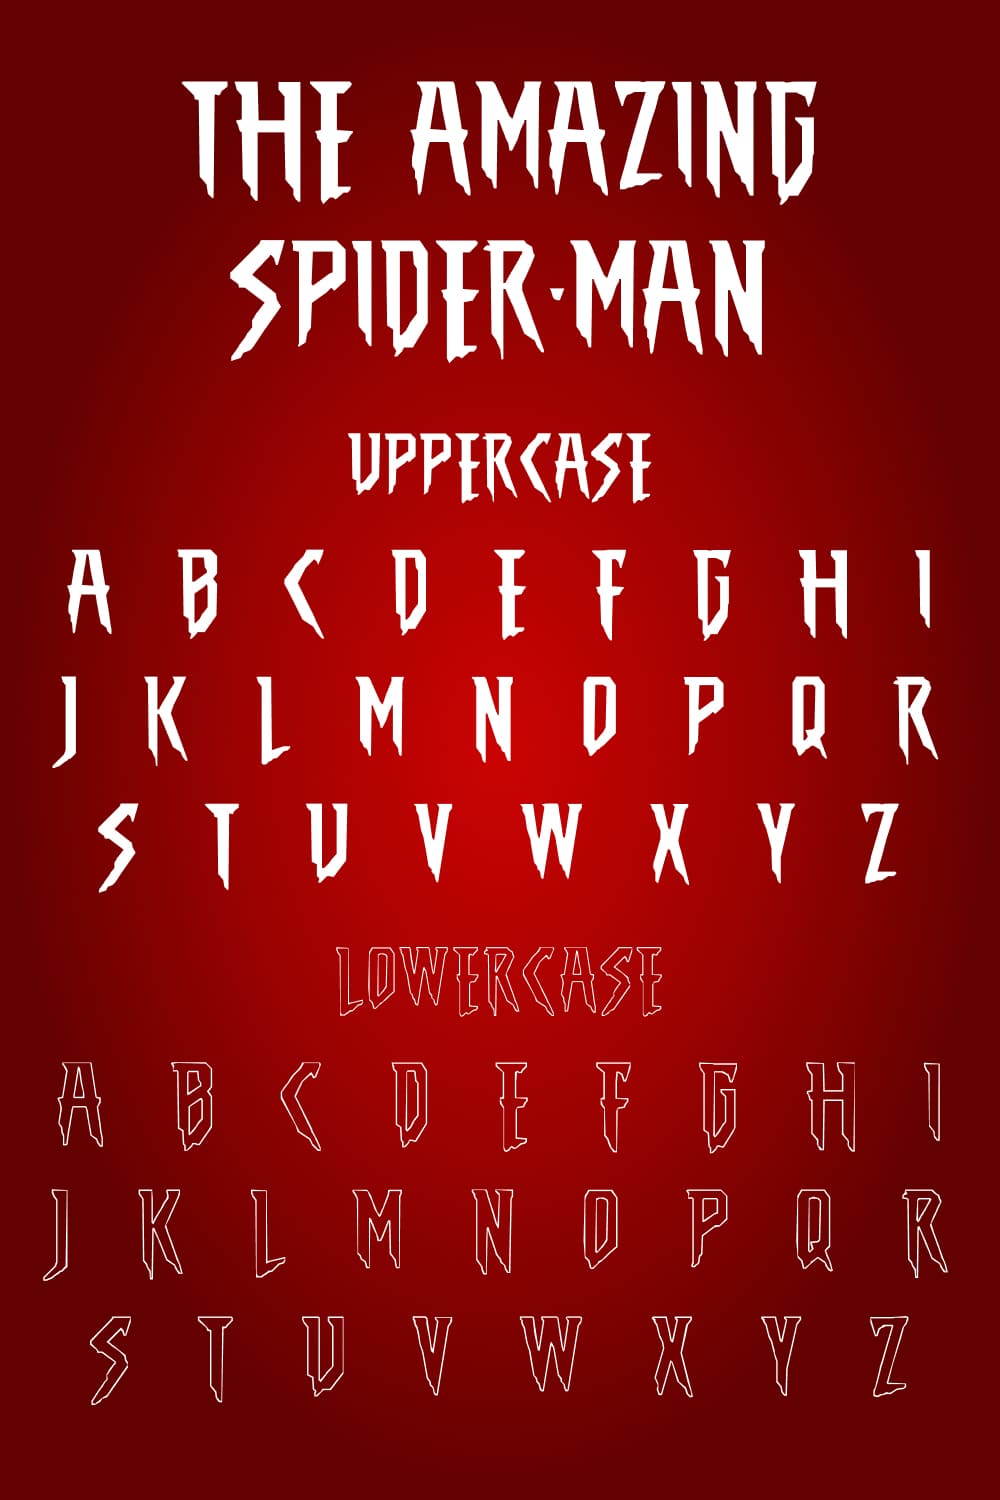 Man Free Spiderman Font.